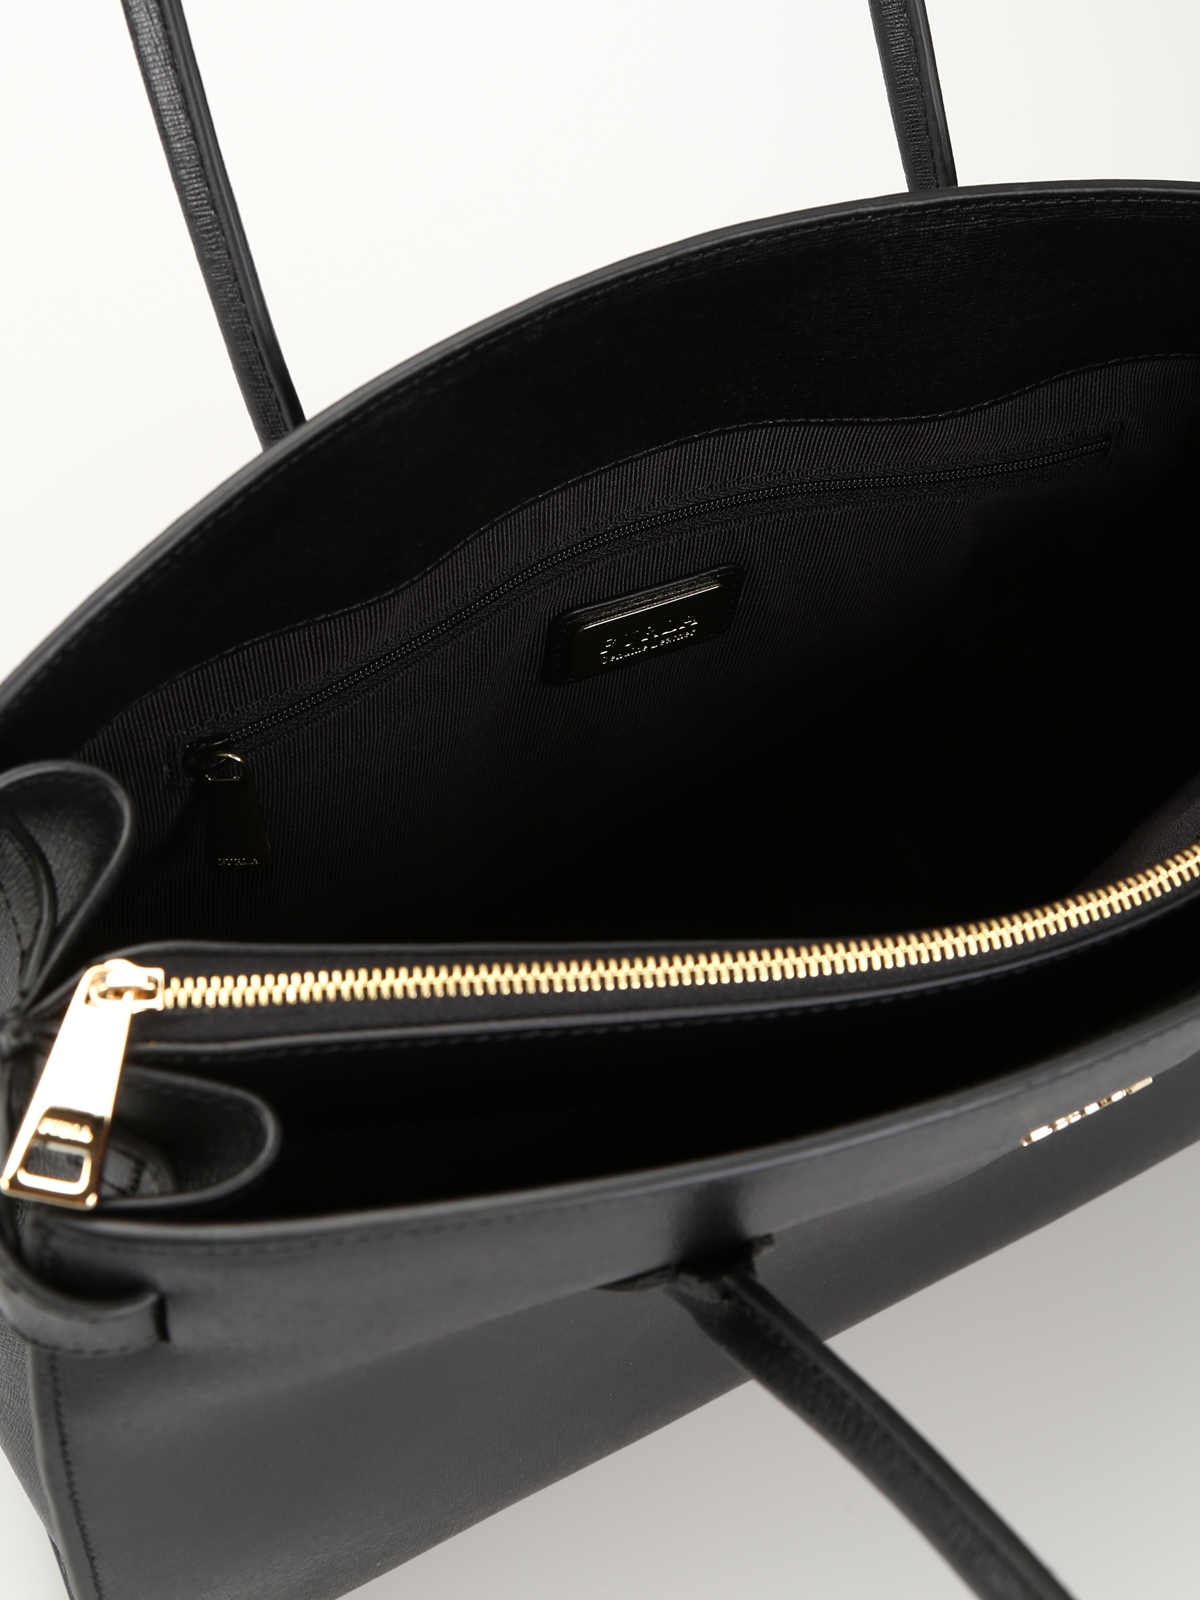 Totes bags Furla - Pin black smooth leather medium tote bag